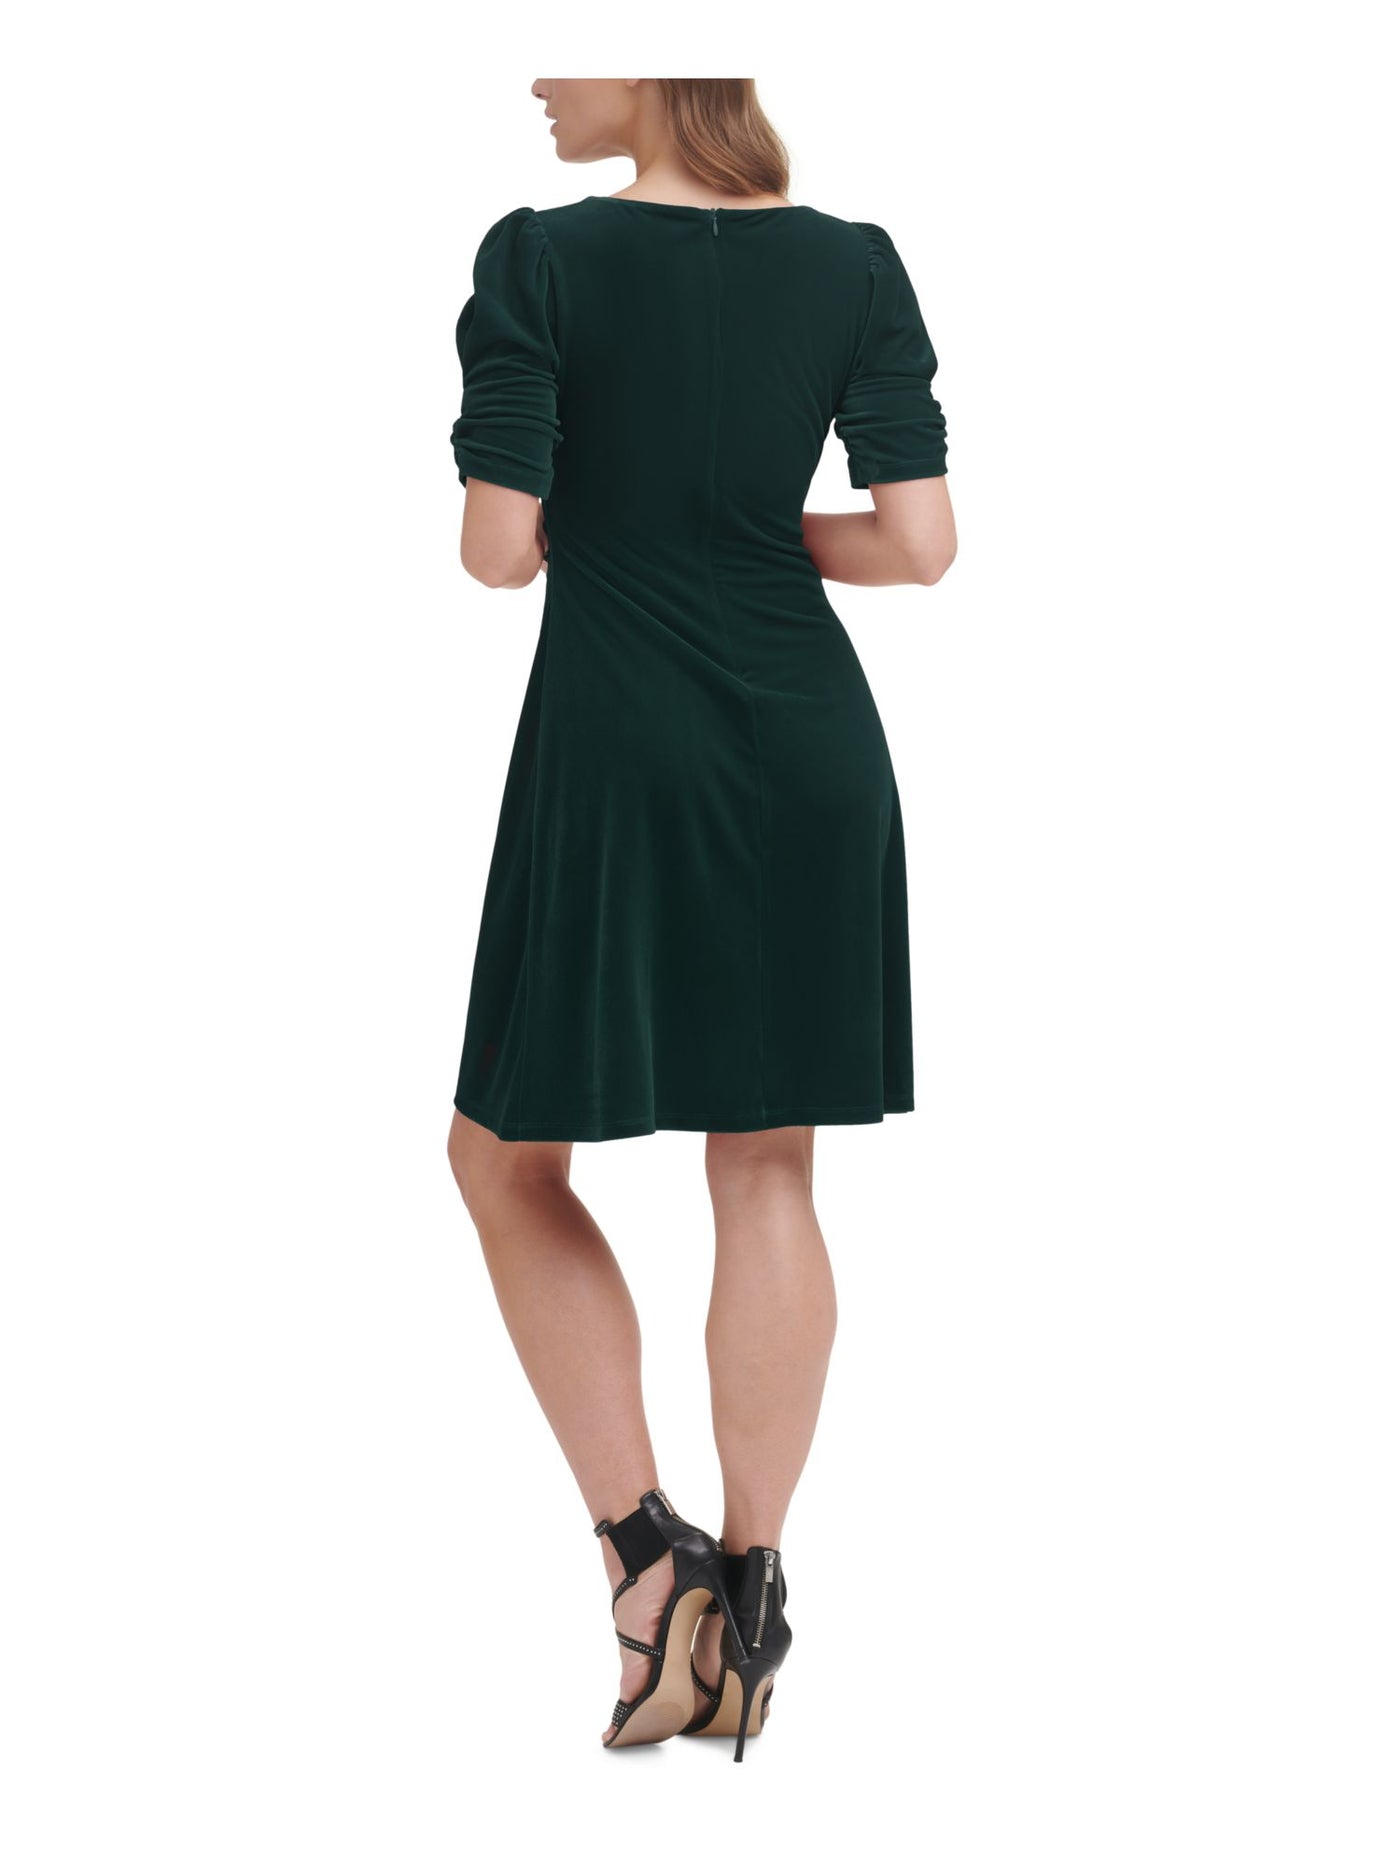 DKNY Womens Green Ruched Zippered Velvet Textured Pouf Sleeve V Neck Knee Length Party Sheath Dress 12